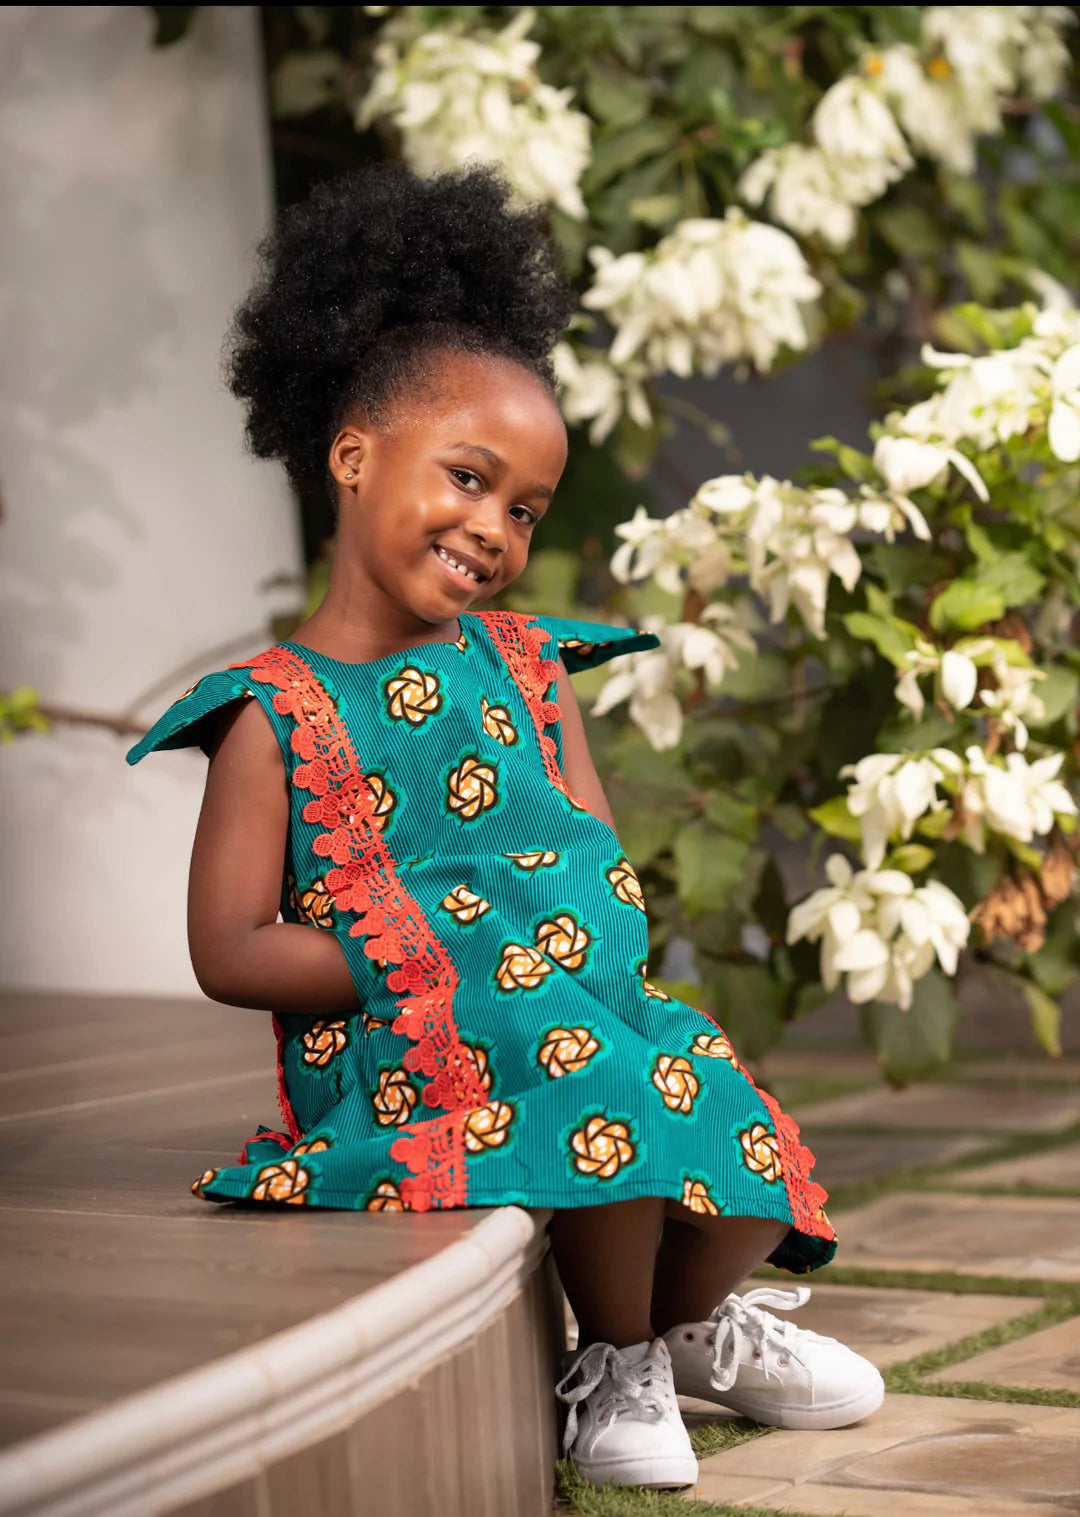 African inspired handbags, jewelry and clothing made in Ghana – Kua